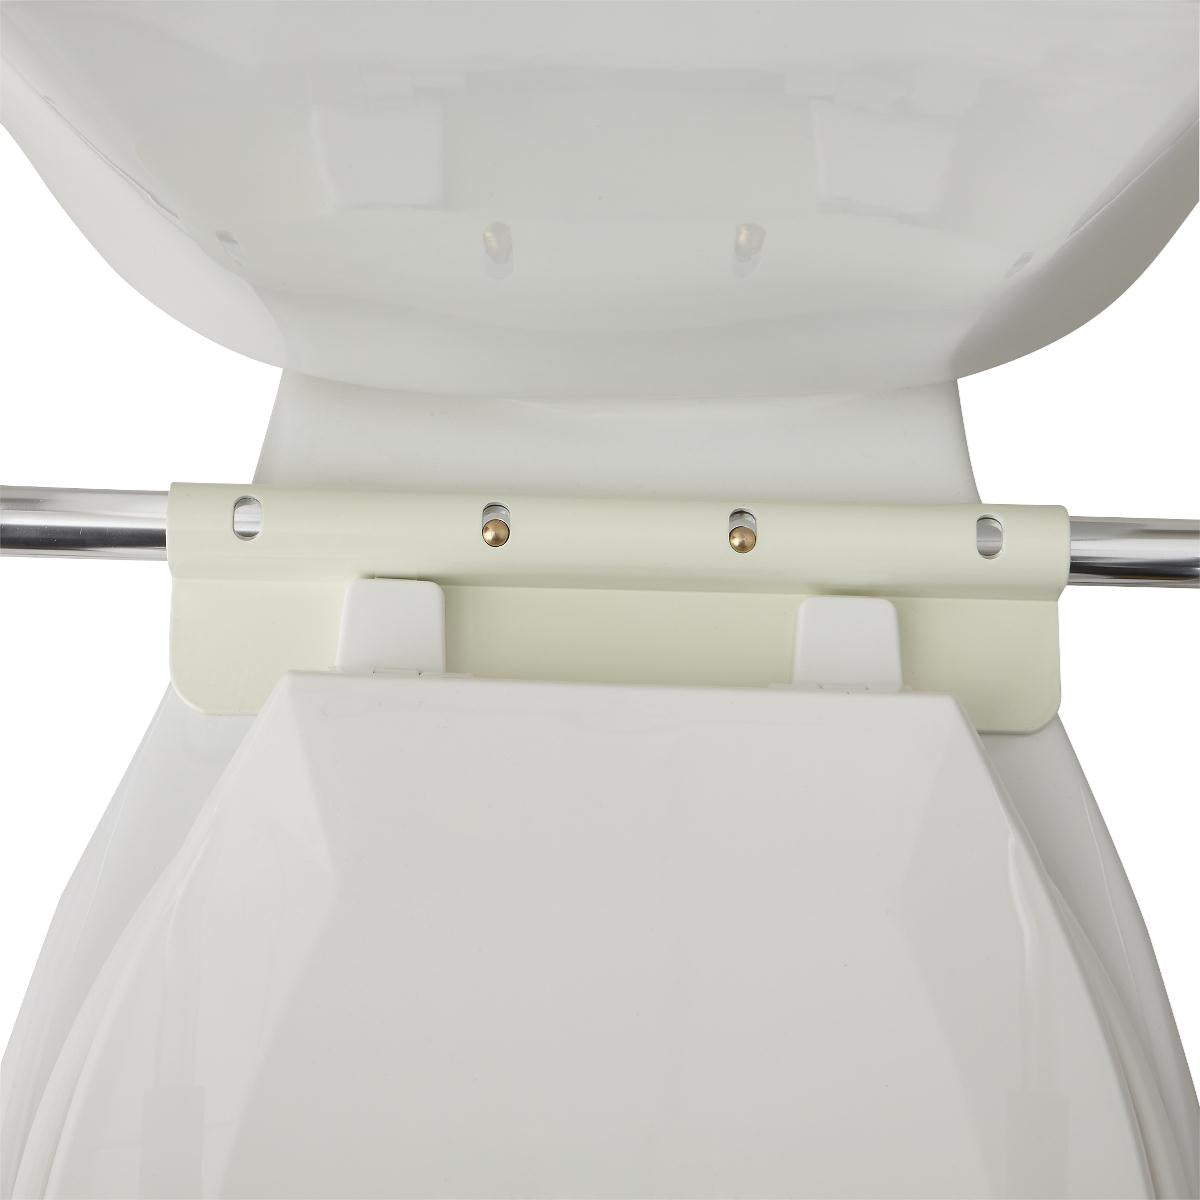 Foldable Toilet Safety Rails (1 Pair)